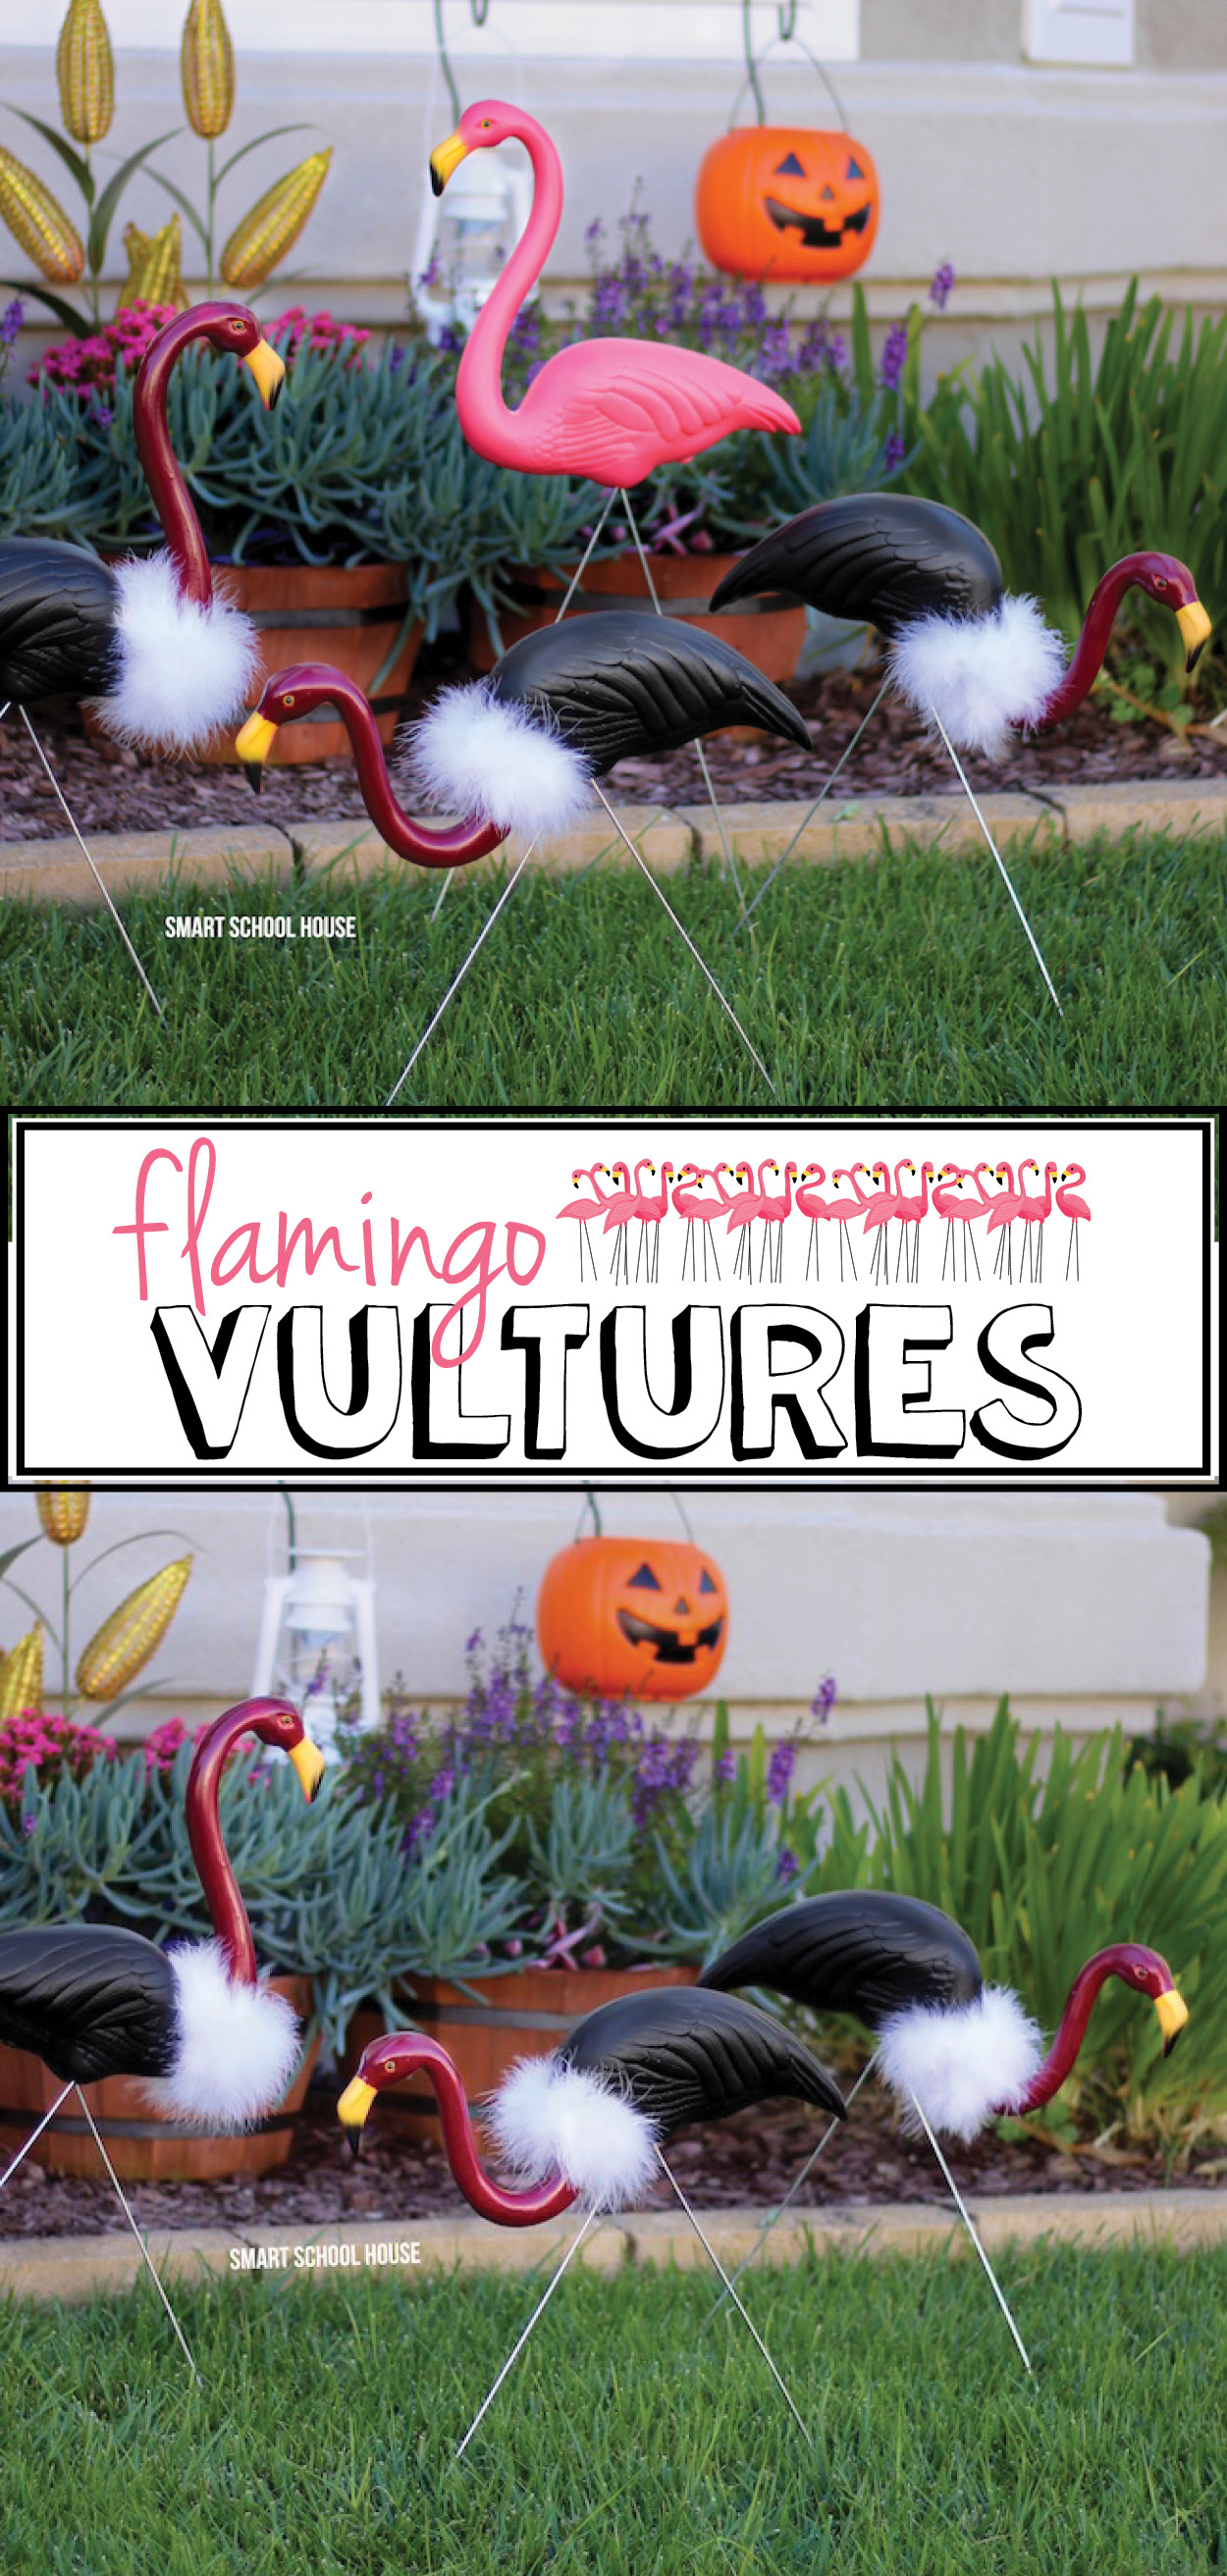 Flamingo Vultures Smart School House